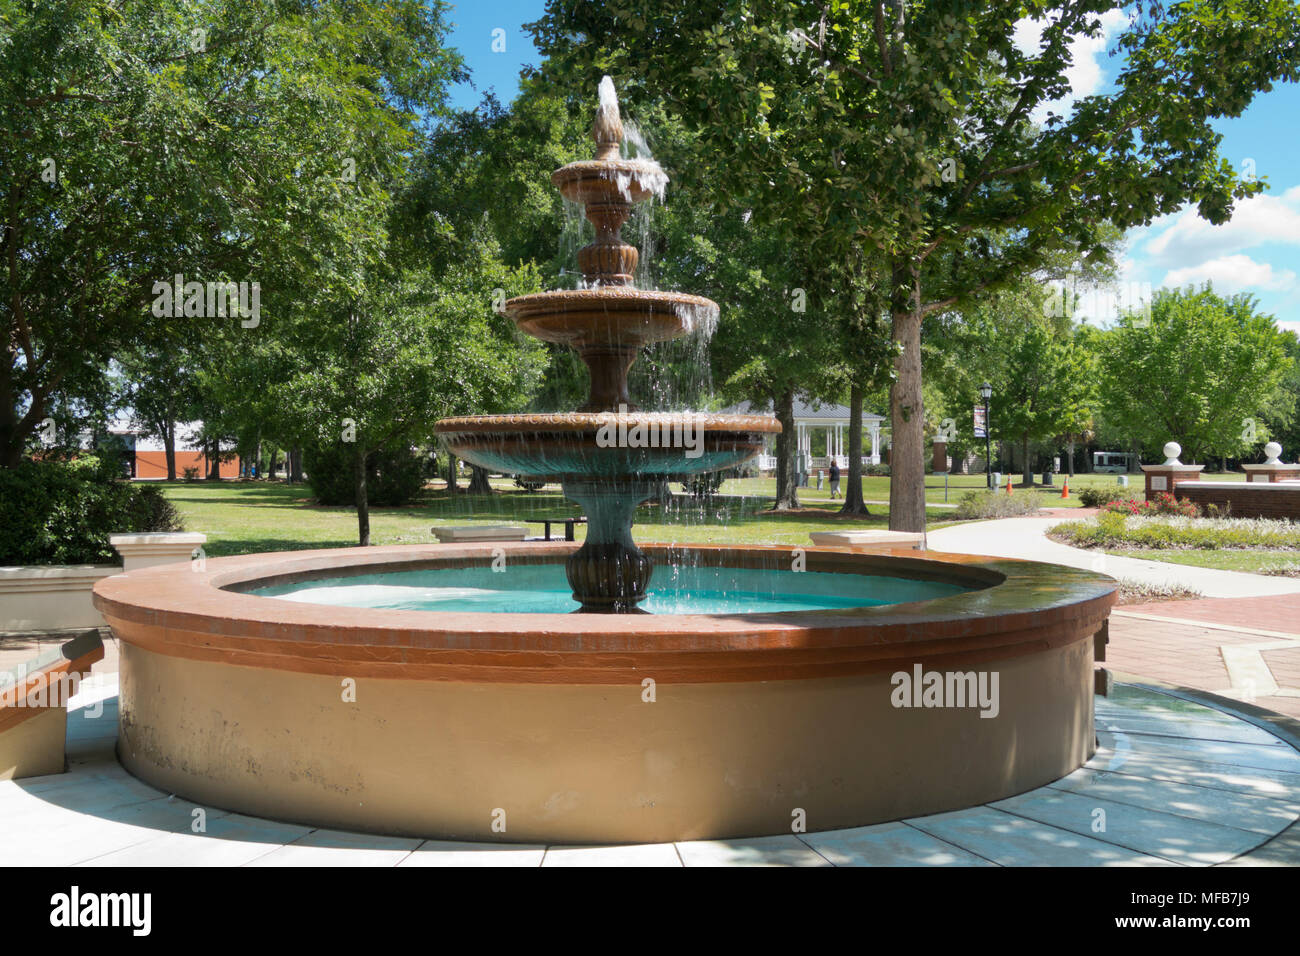 Water fountain in a municipal park downtown Foley, Alabama. Stock Photo